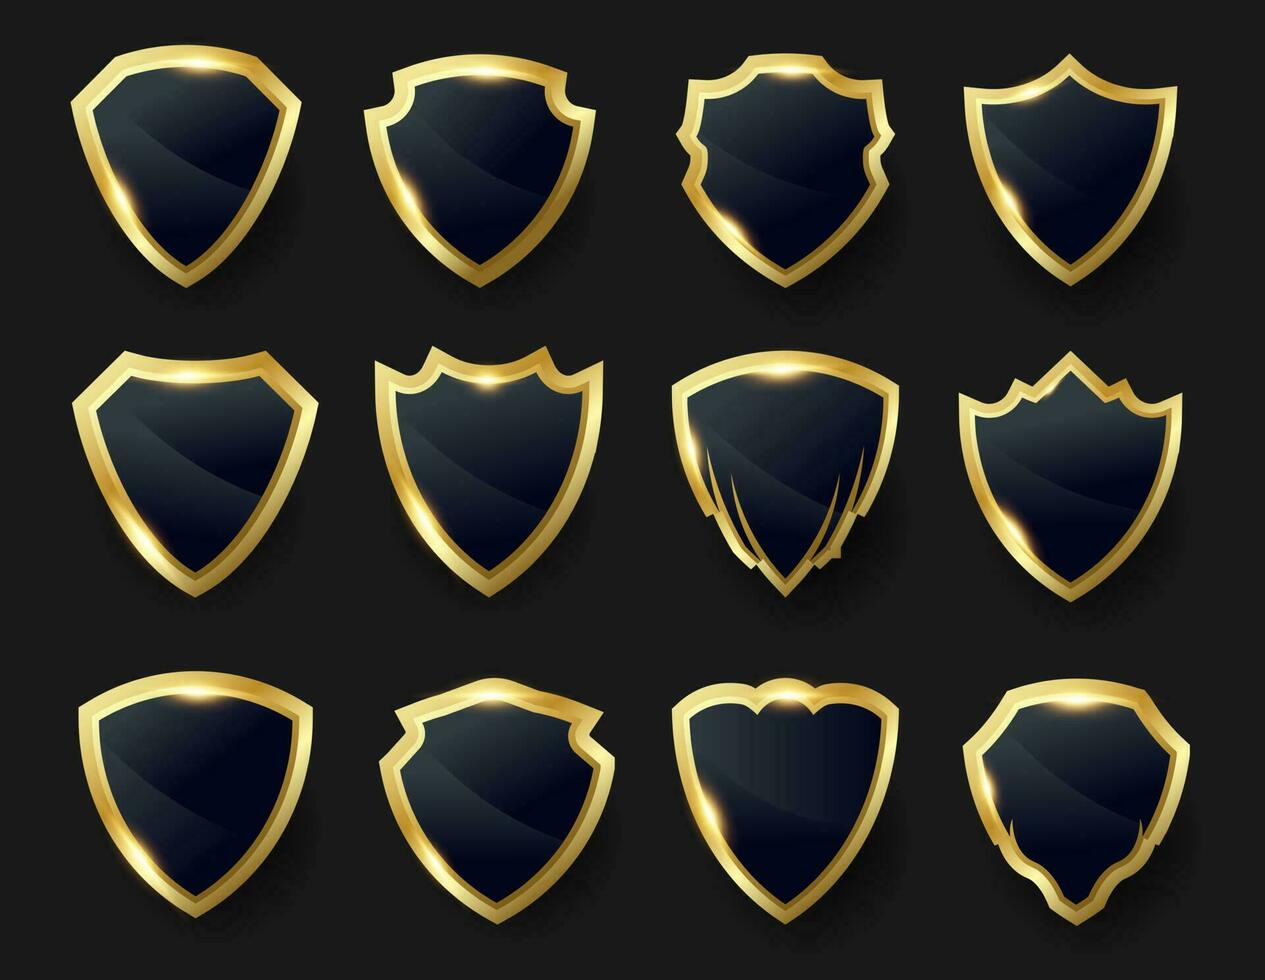 Black and gold shield emblem or badge collection. shield logo vector